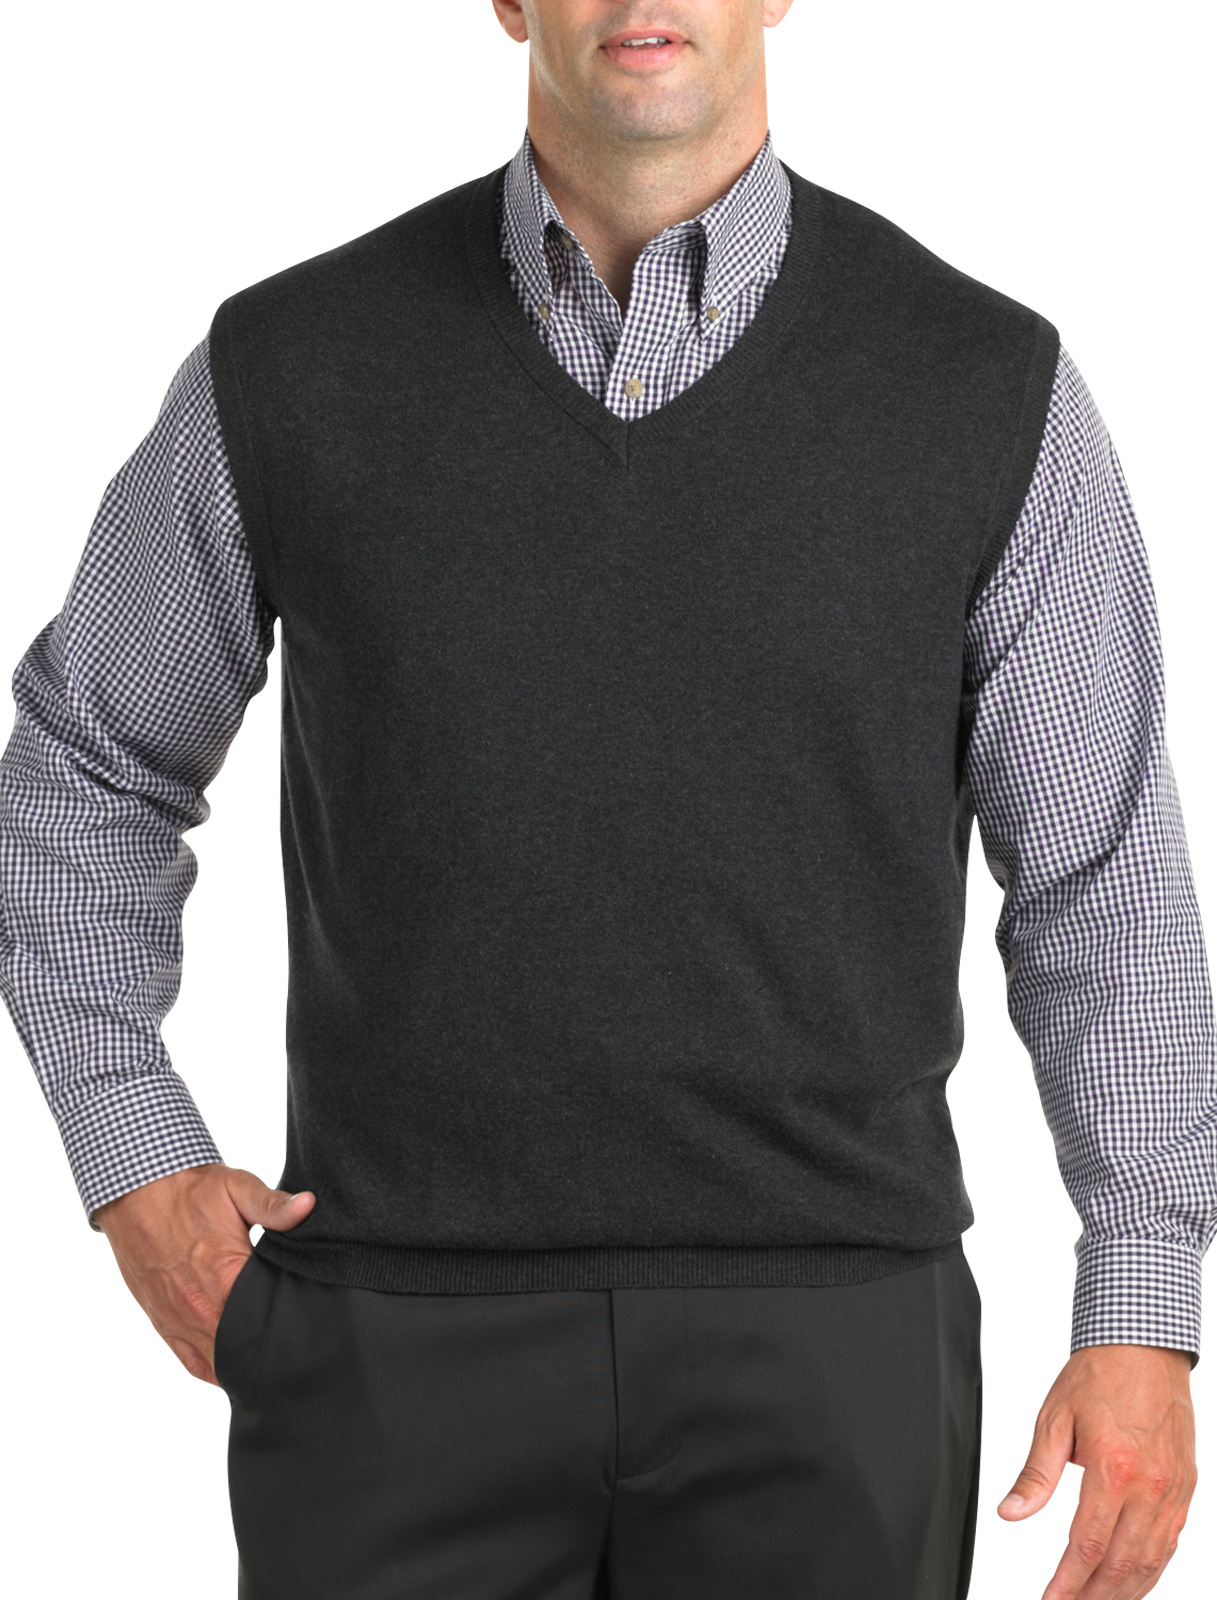 Harbor Bay Men's Big and Tall V-Neck Sweater Vest